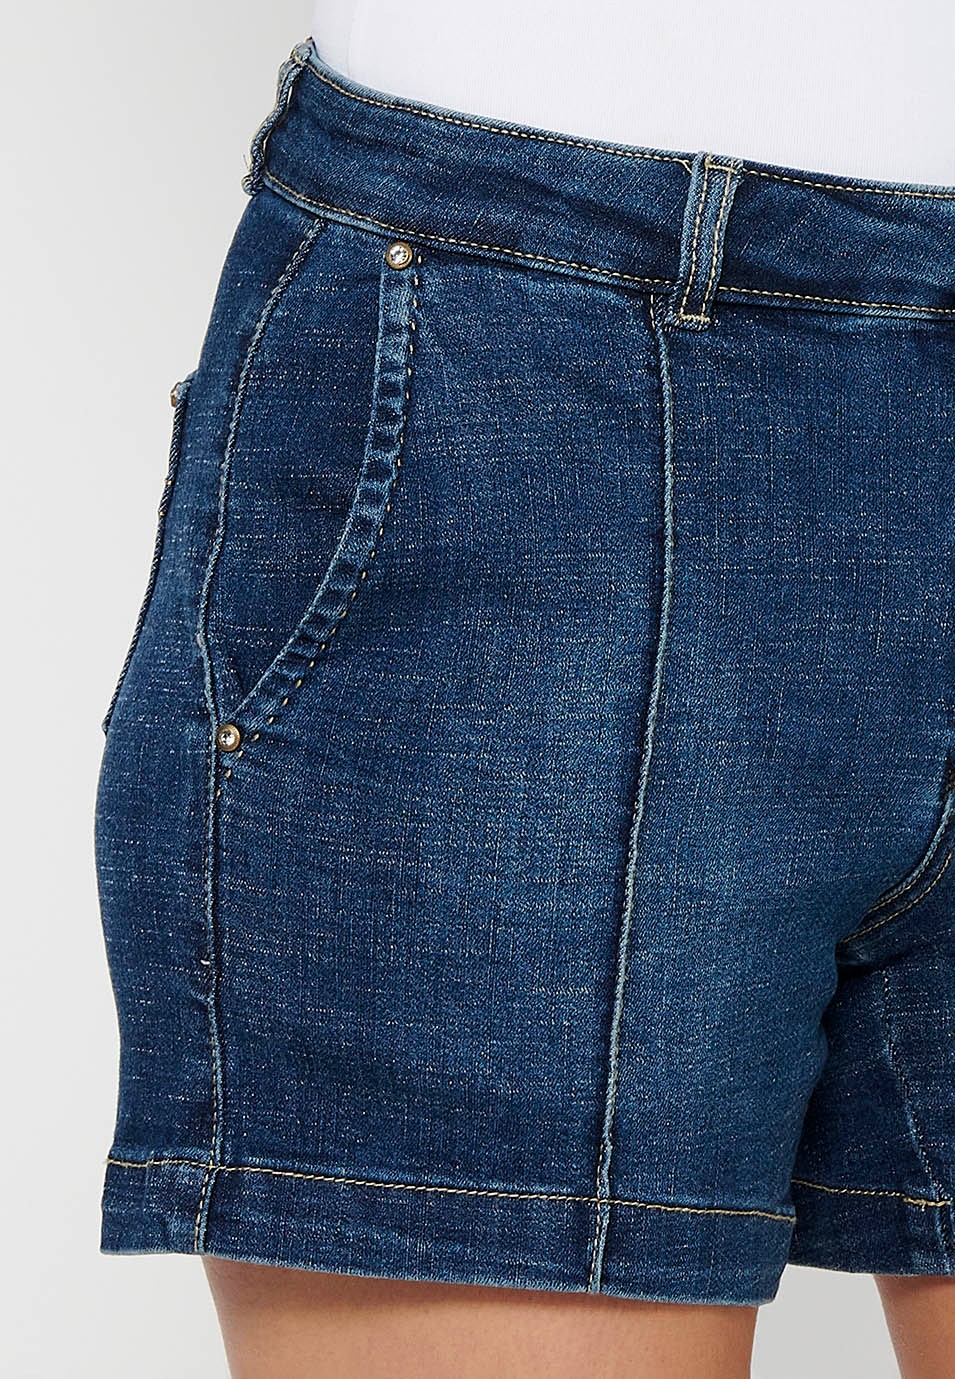 Women's Dark Blue Color Button Zipper Front Closure Flared Shorts 7